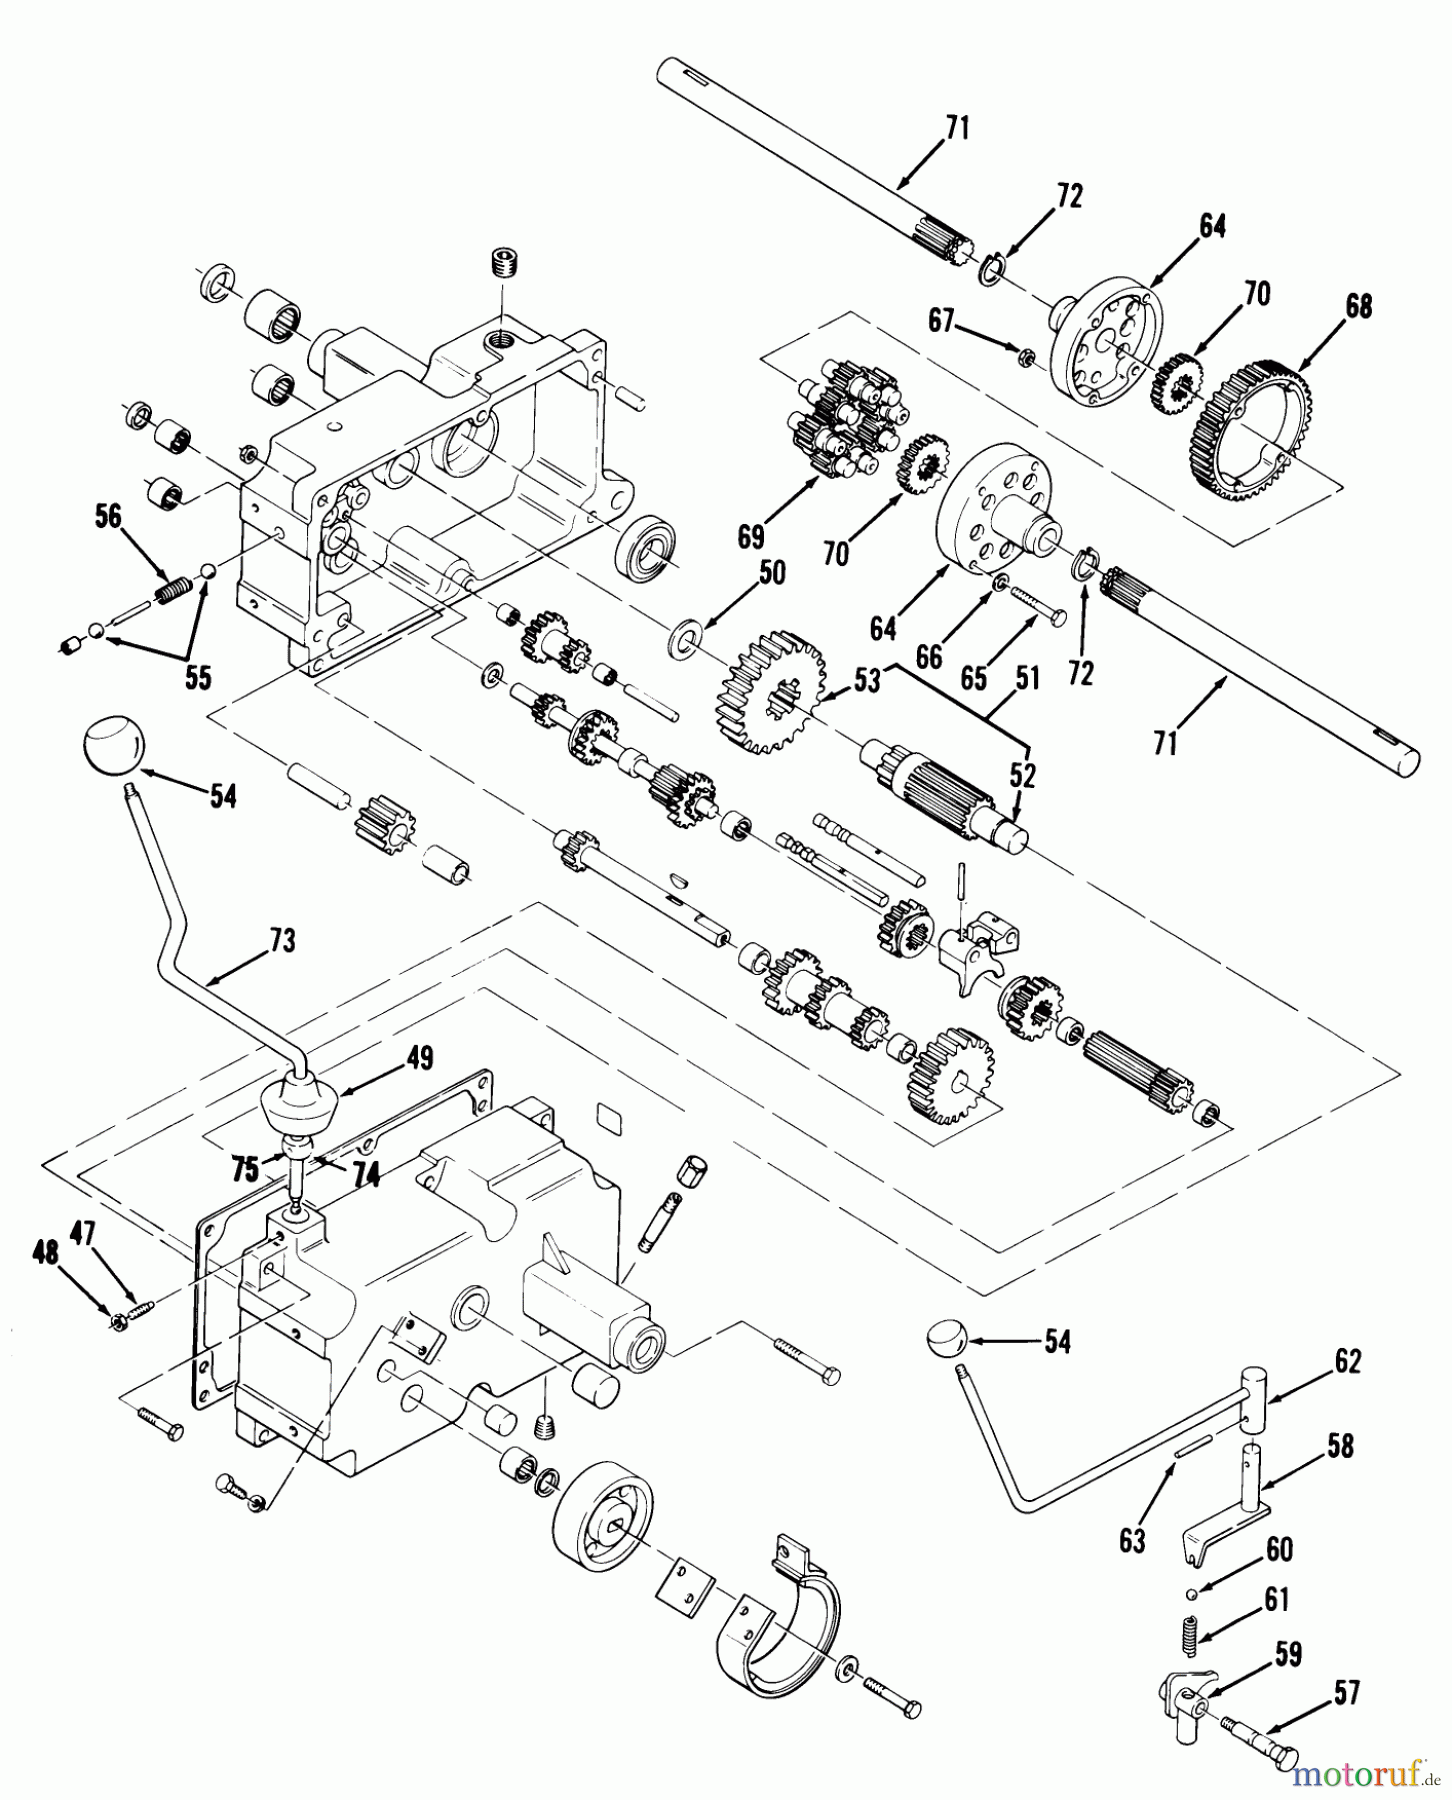  Toro Neu Mowers, Lawn & Garden Tractor Seite 1 01-14E801 (E-141) - Toro E-141 8-Speed Tractor, 1982 MECHANICAL TRANSMISSION-8 SPEED #2